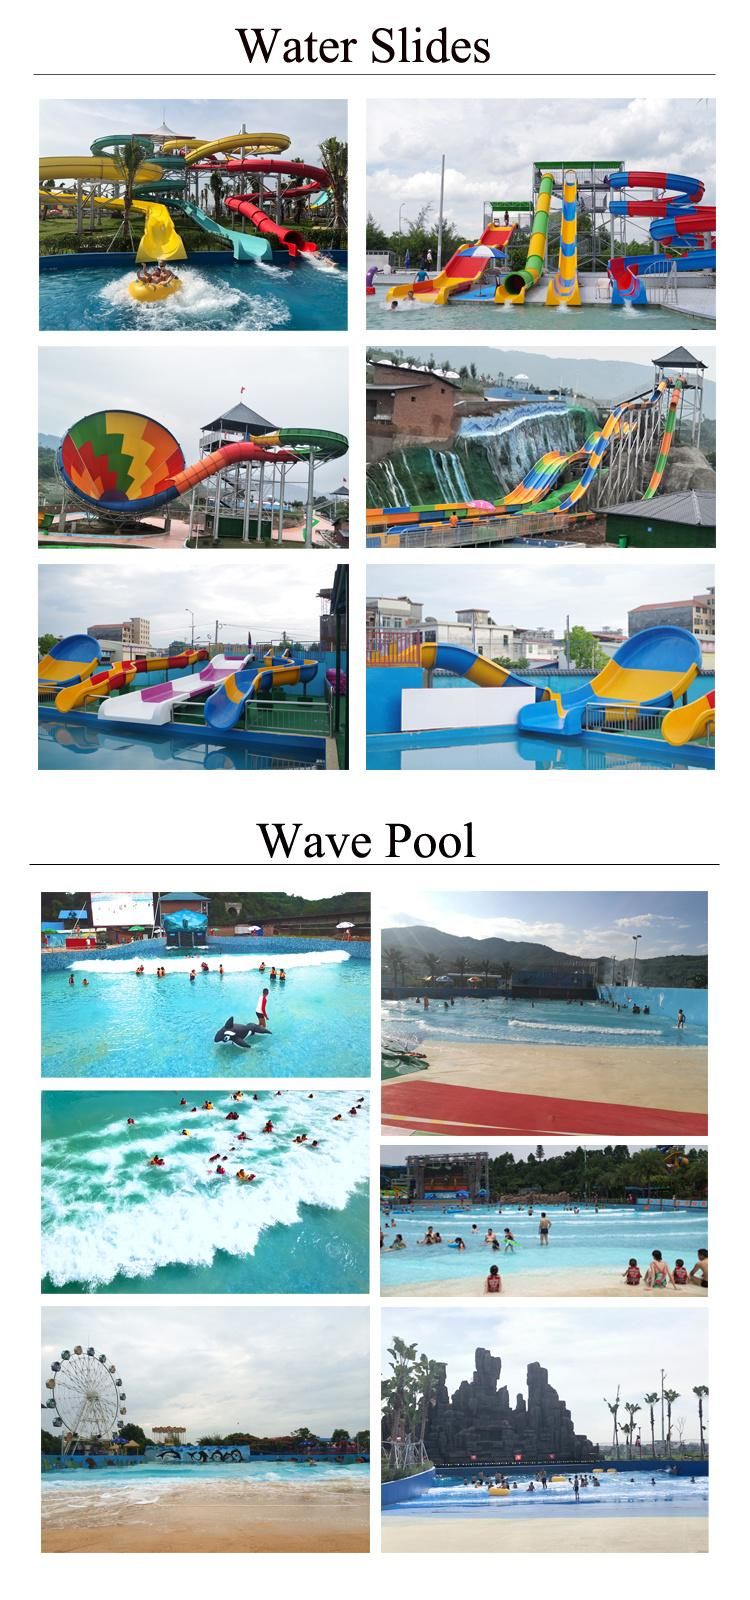 Colorful Competitive Water Slide Fiberglass Aqua Park for More Players